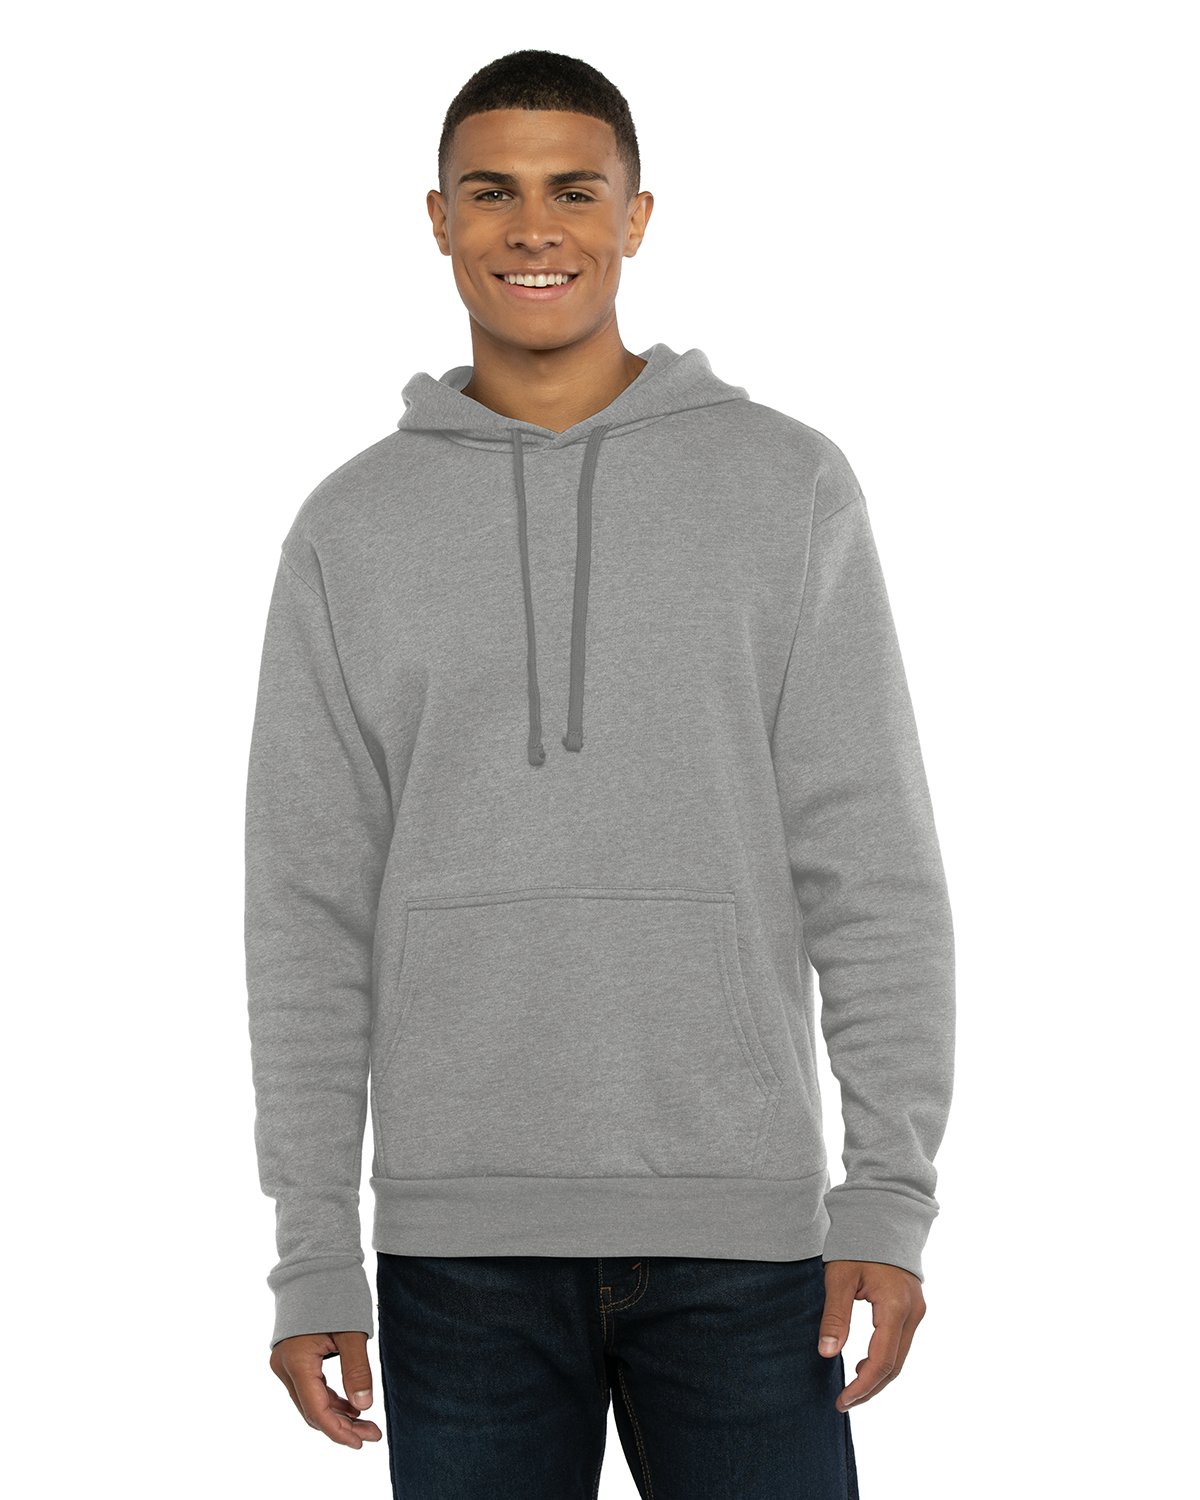 Next Level Apparel Unisex Malibu Pullover Hooded Sweatshirt | alphabroder